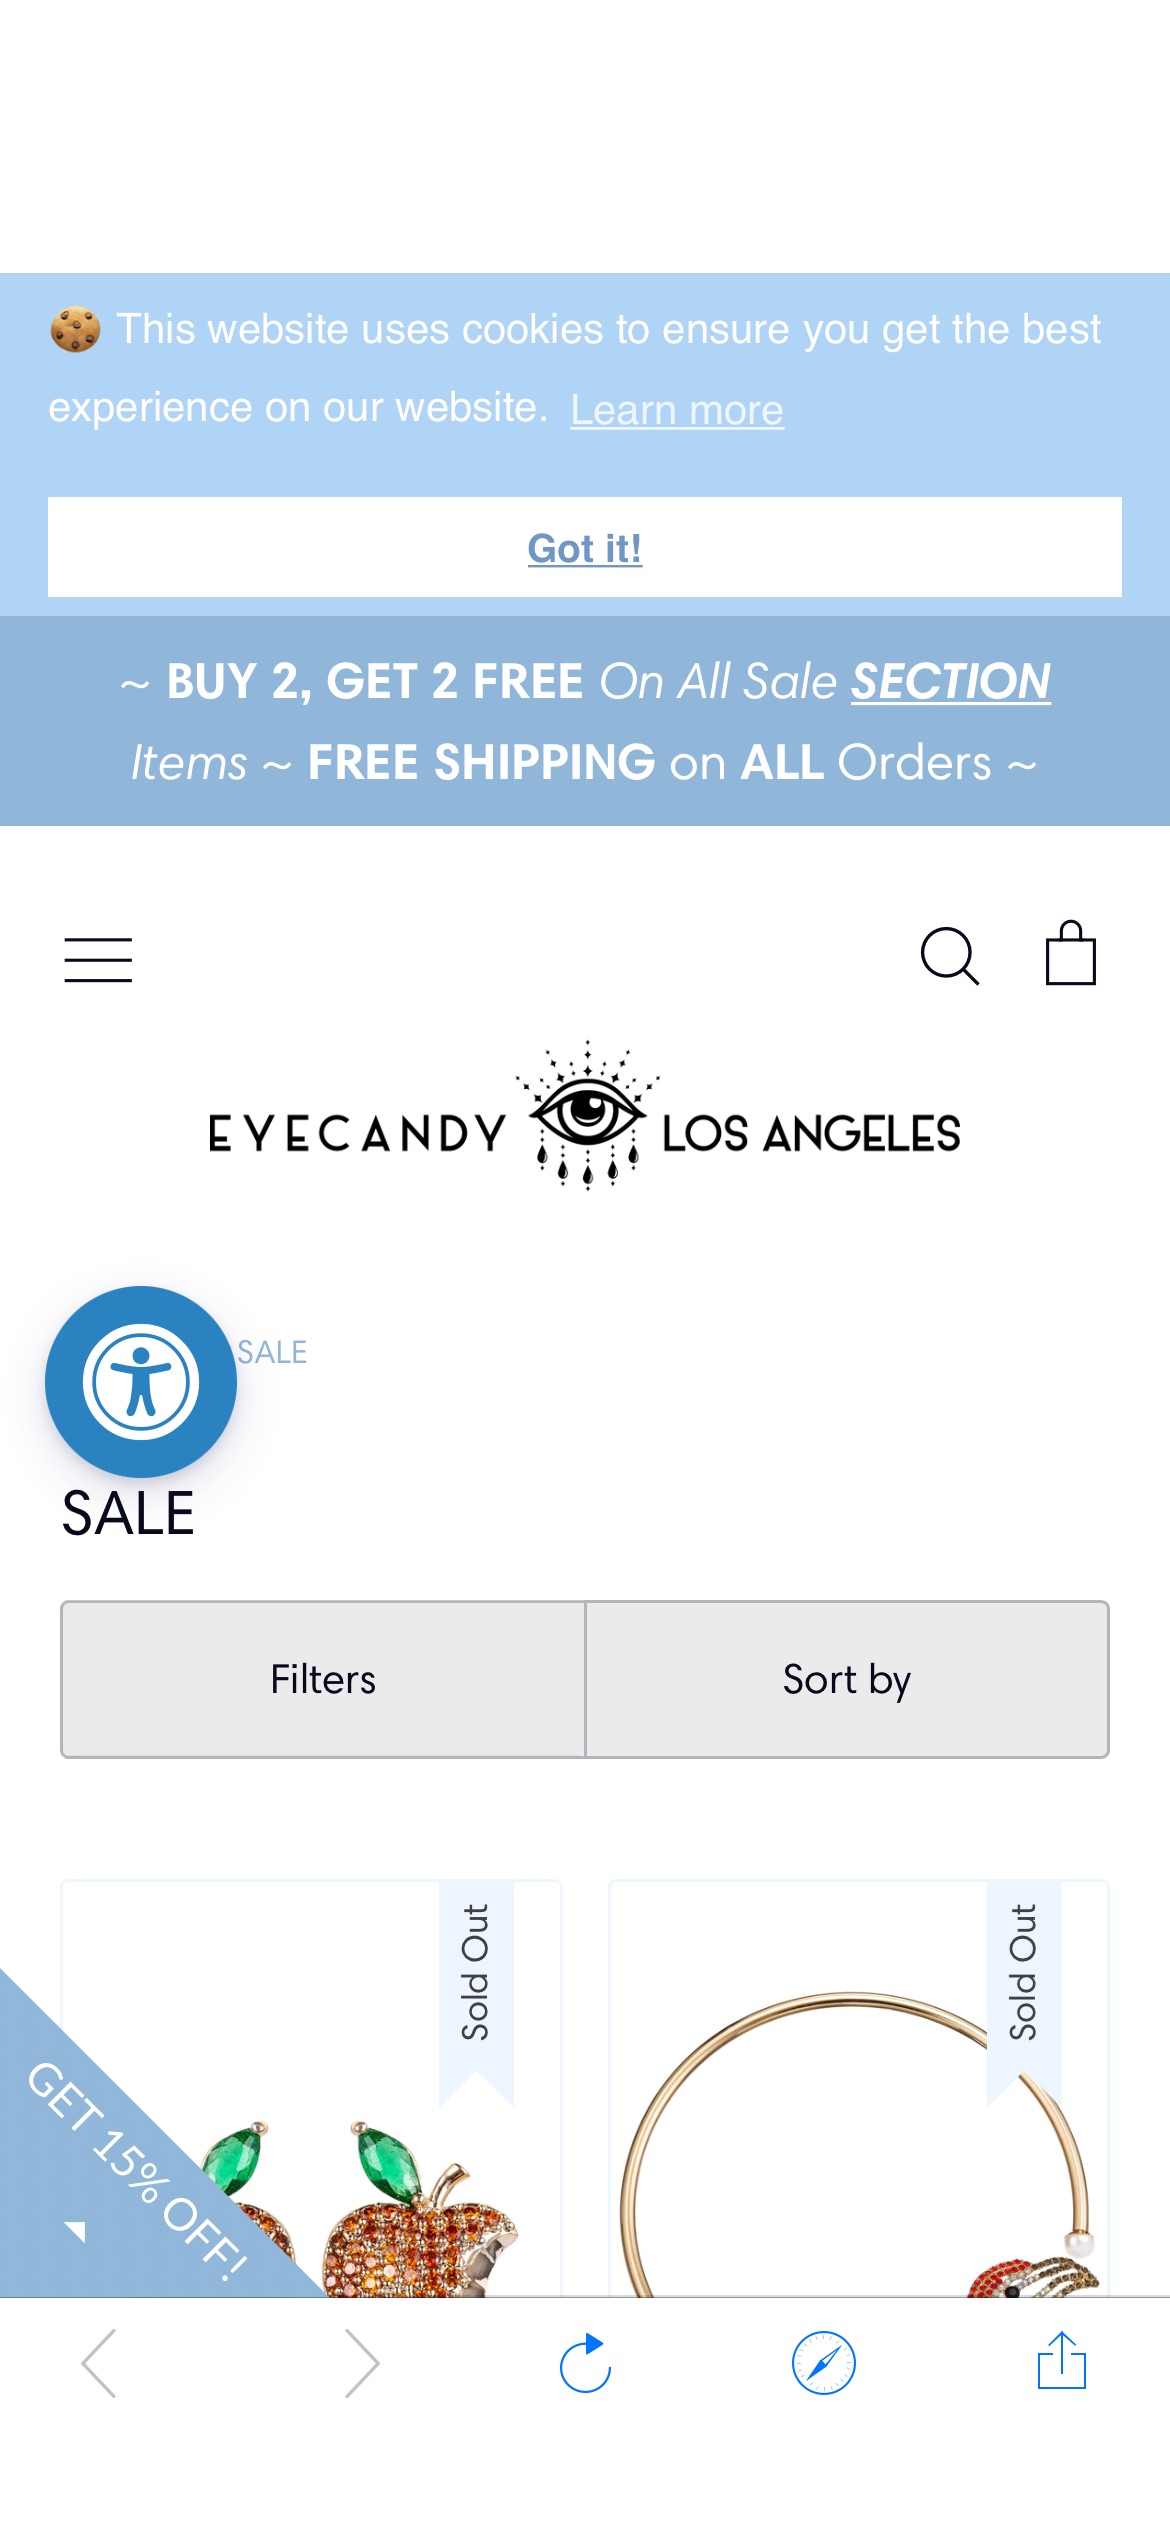 SALE by Eye Candy LA – Eyecandy Los Angeles 活動區買二送二或折扣區單品高達70% off